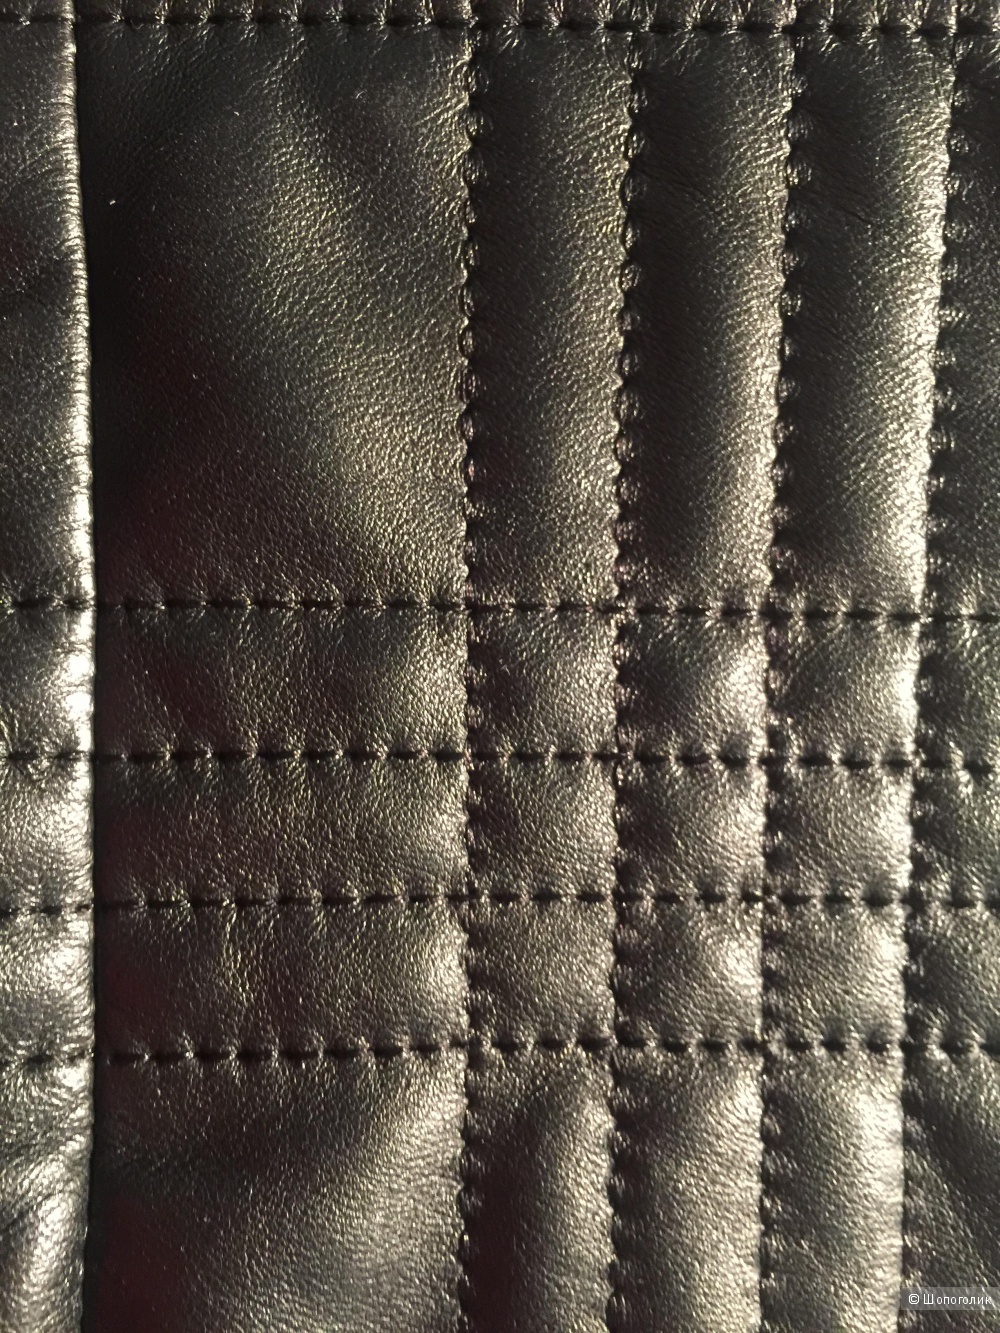 Куртка кожаная с мехом  Vito Ponti, размер 46-50